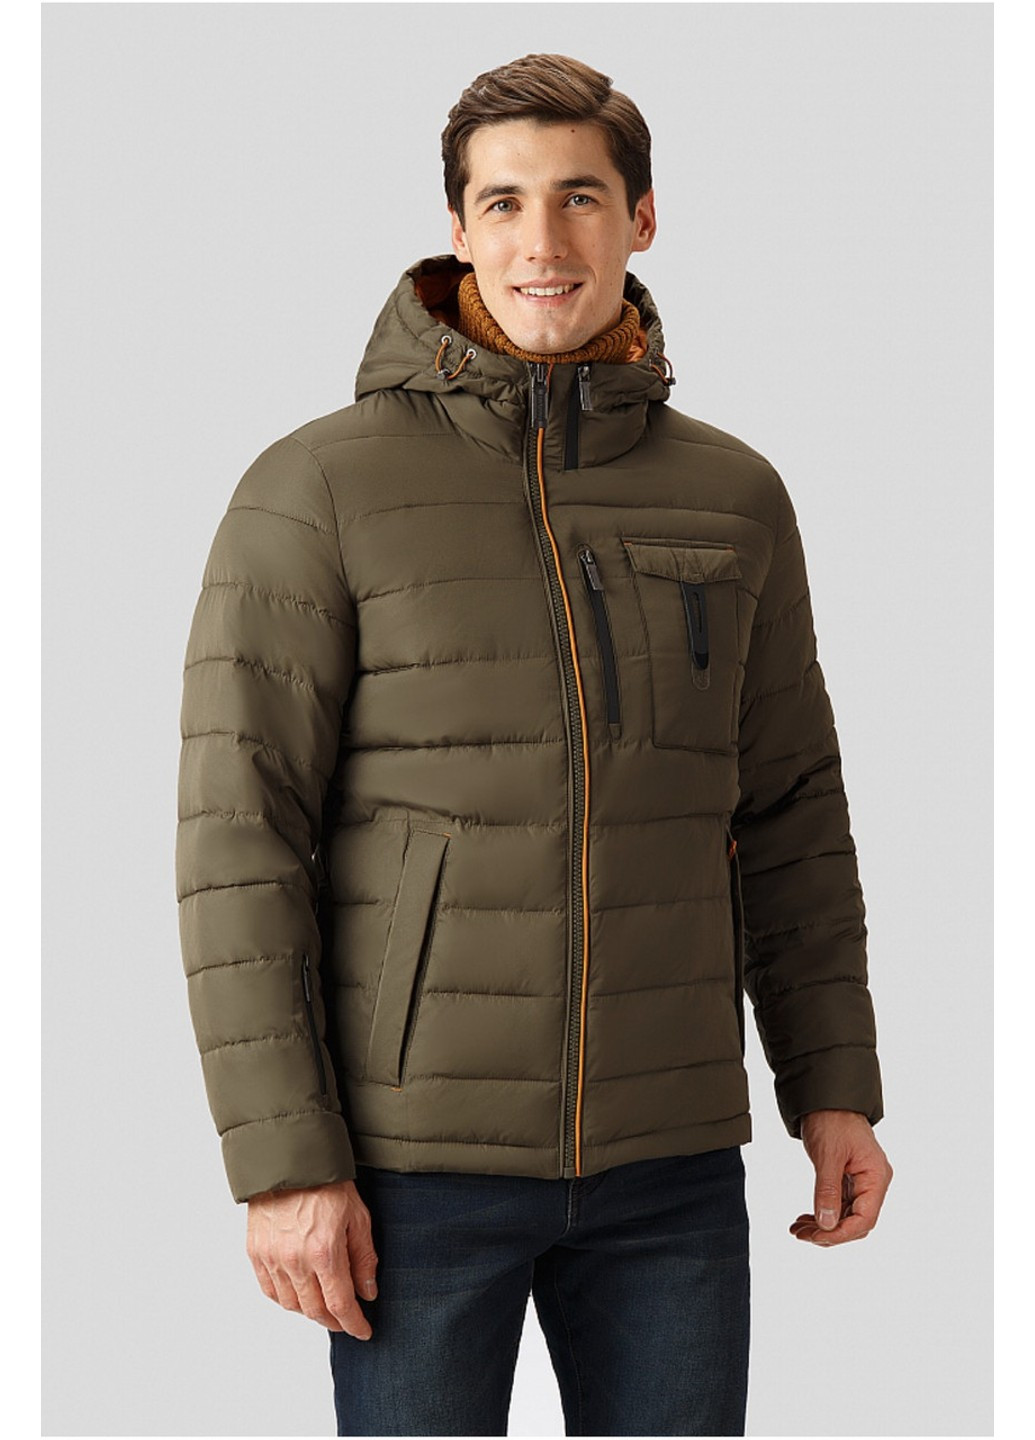 Зеленая зимняя зимняя куртка w18-42002-905 Finn Flare